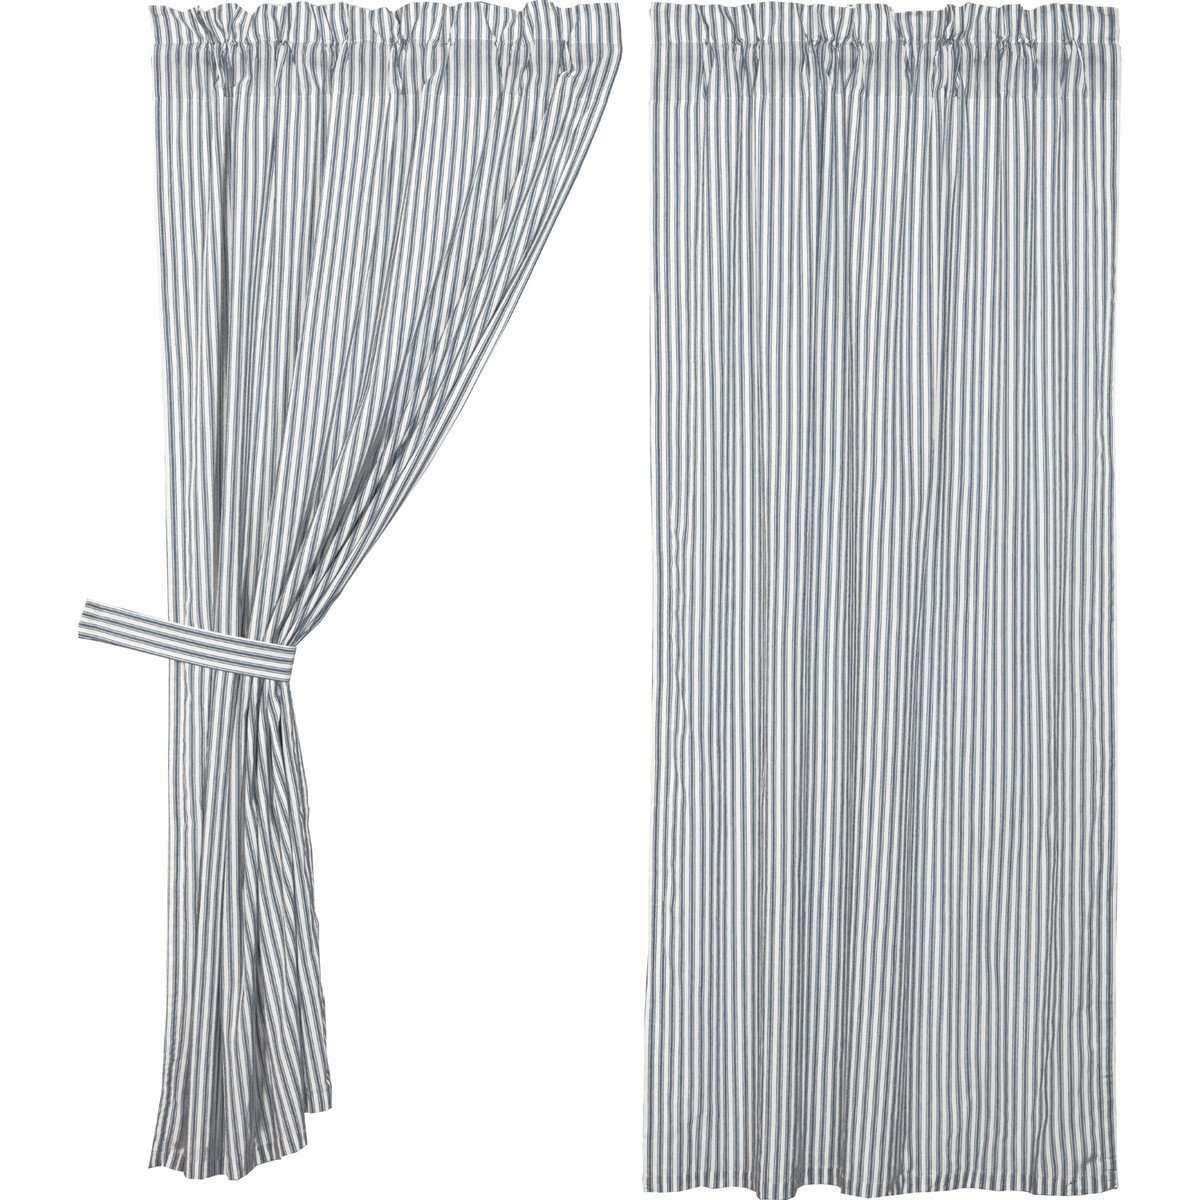 Sawyer Mill Blue Ticking Stripe Short Panel Curtain Set of 2 63"x36" - The Fox Decor